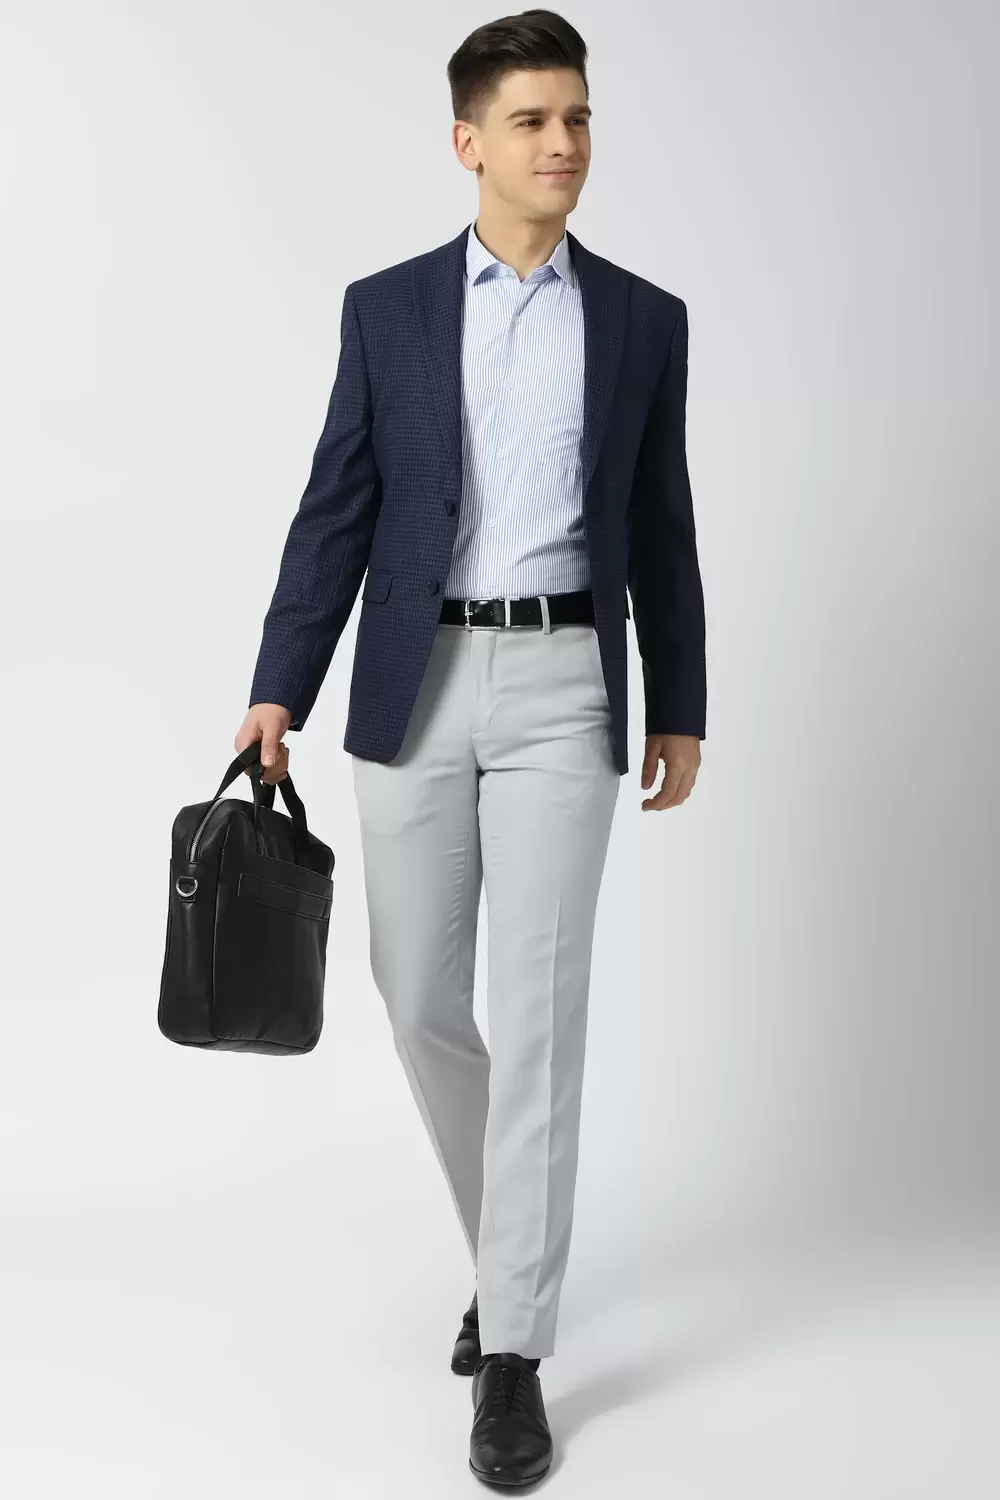 Buy Peter England Men Navy Blue Solid Super Slim Fit Formal Trousers online